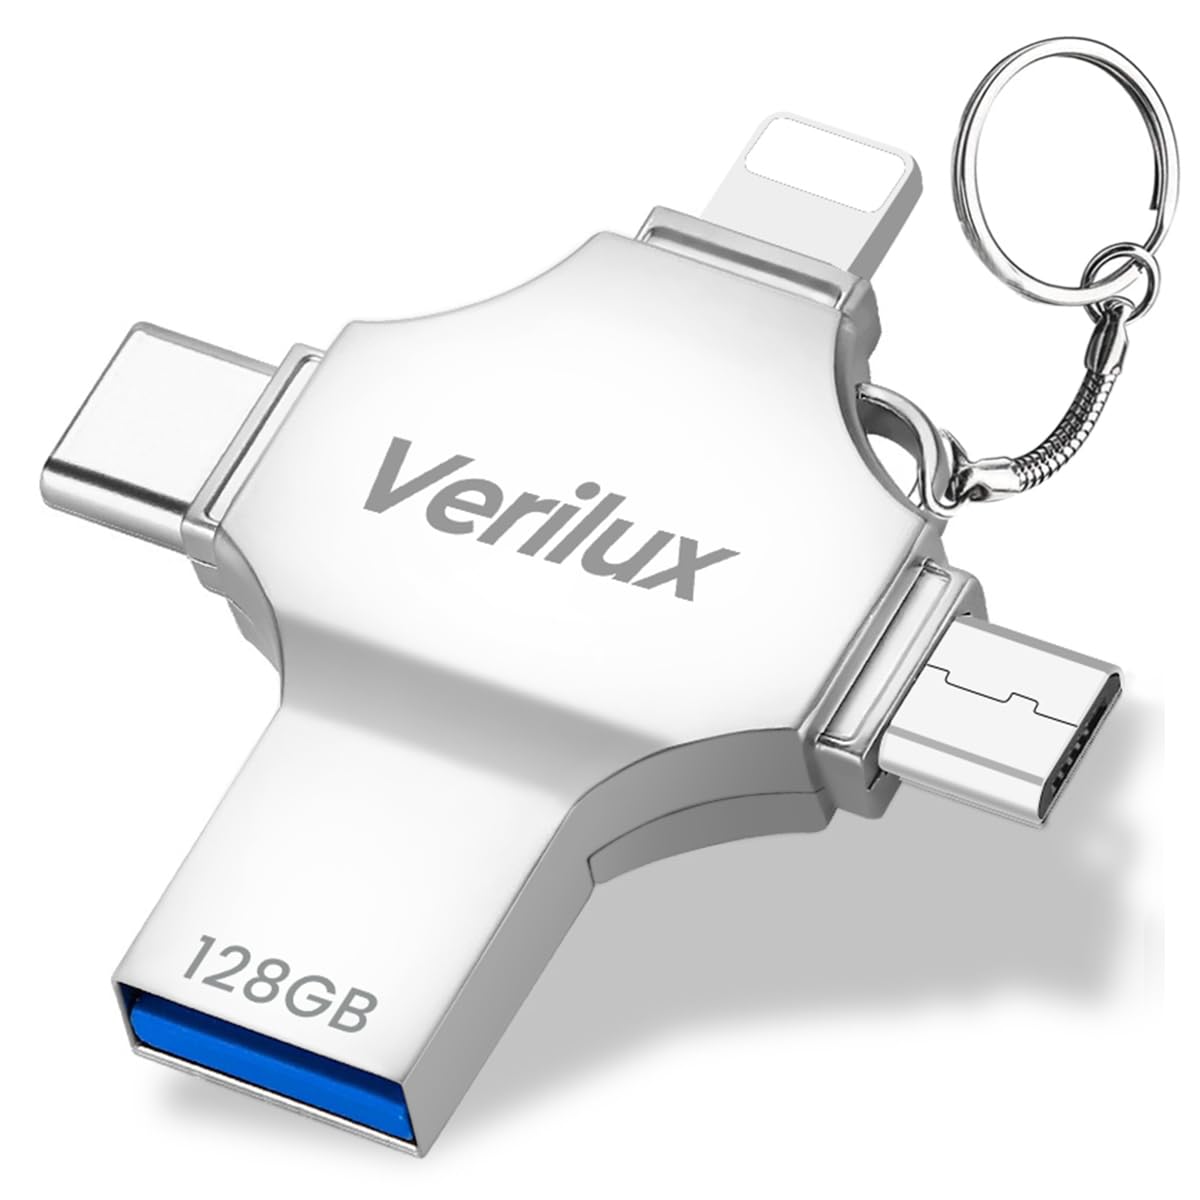 Verilux Pendrive 4 in 1 Flash Drive (128GB)